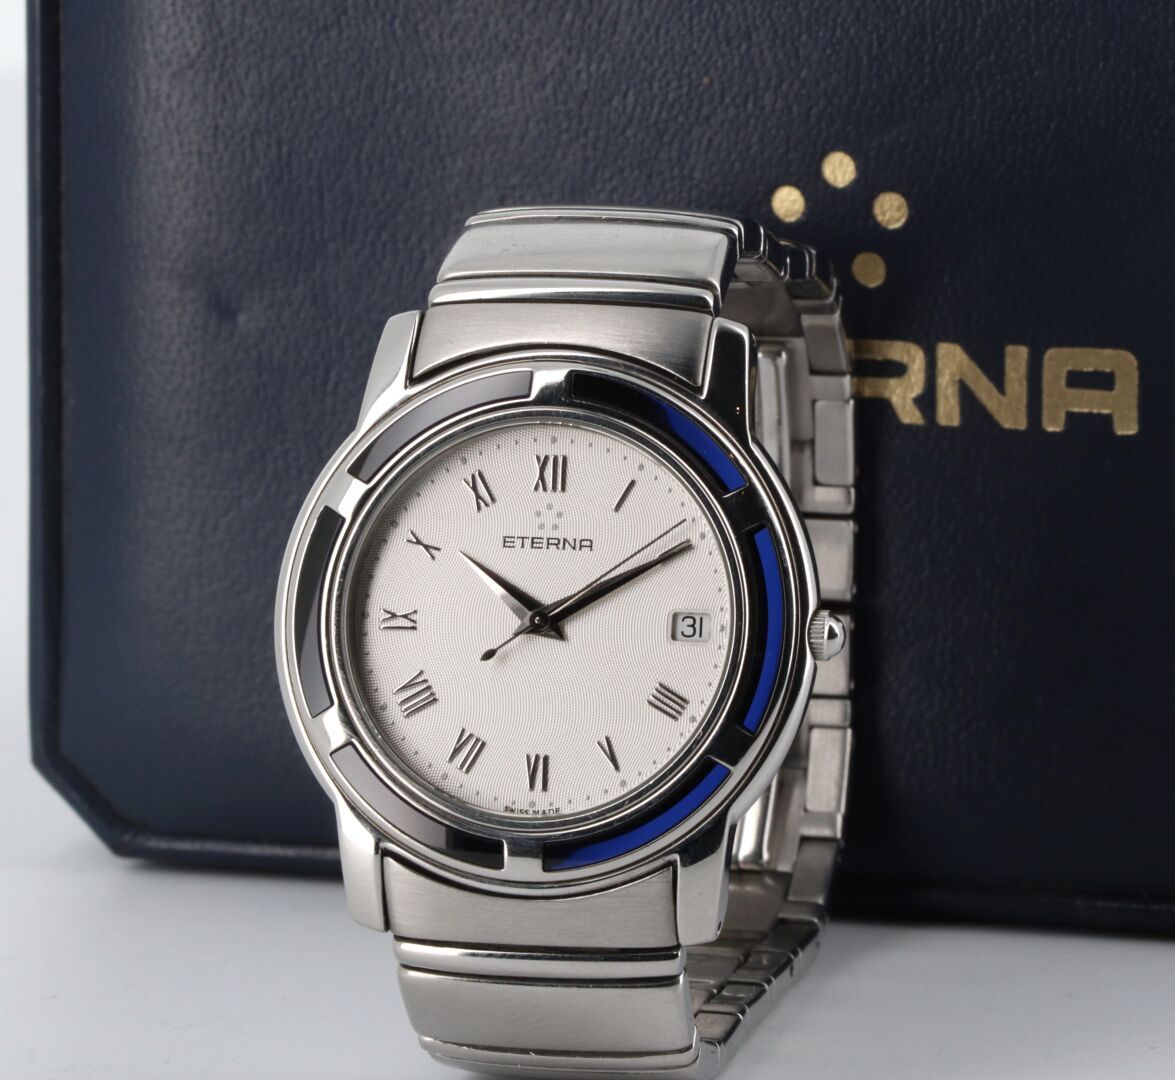 ETERNA "Galaxis" ref. 3106-41s vers 2000 Extra-flat stainless steel wristwatch, &hellip;